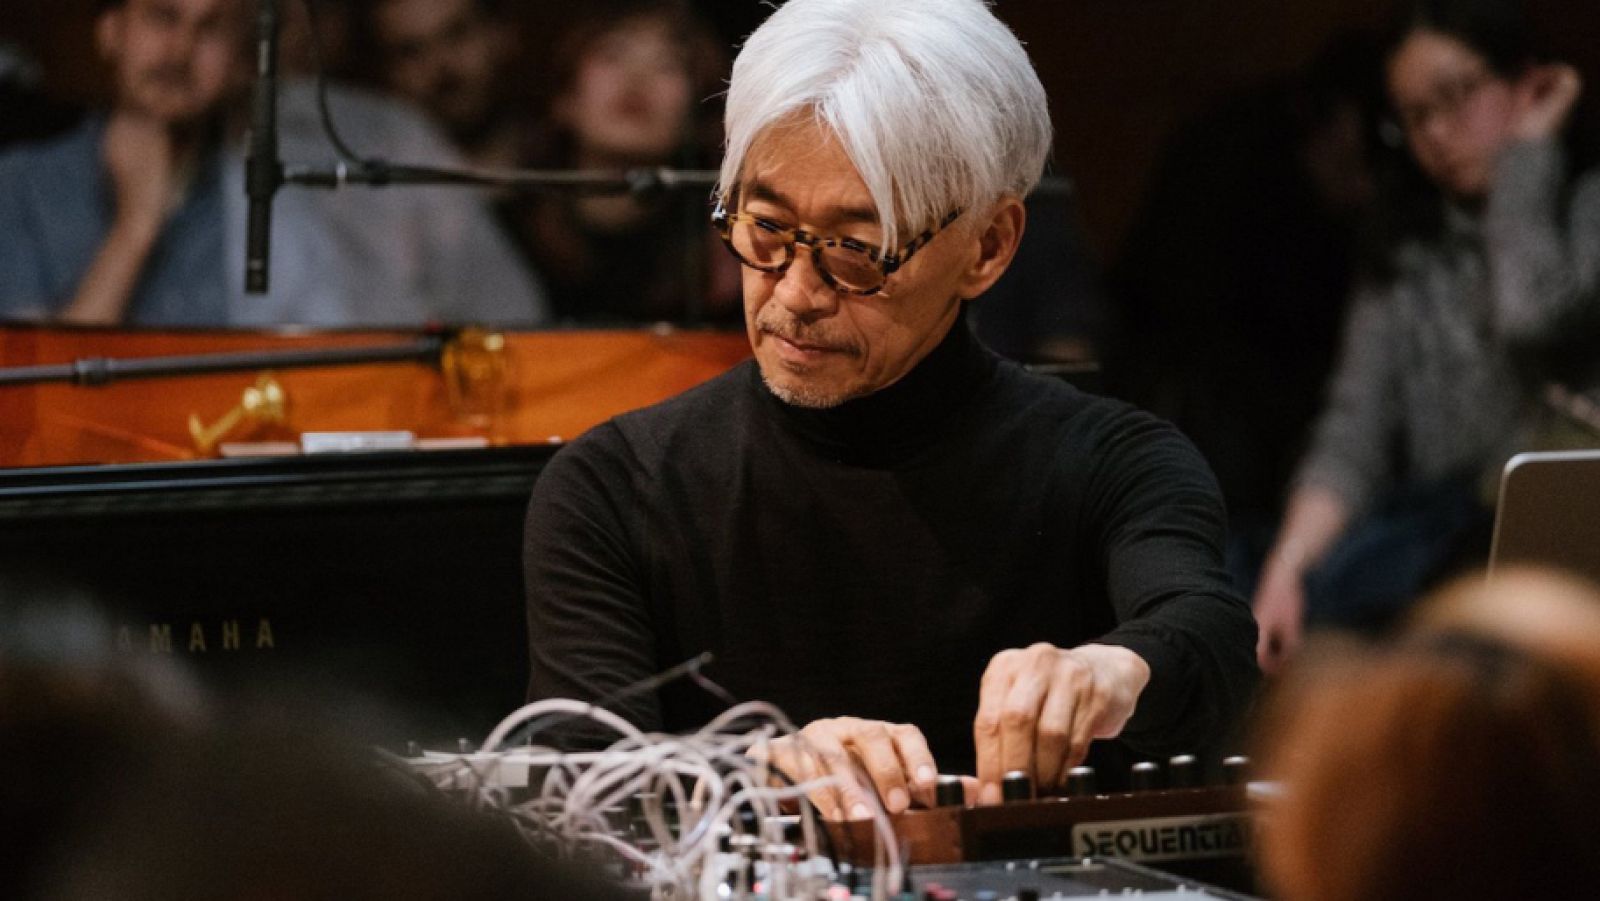 ryuichi sakamoto playing the orchestra 2014 lossless